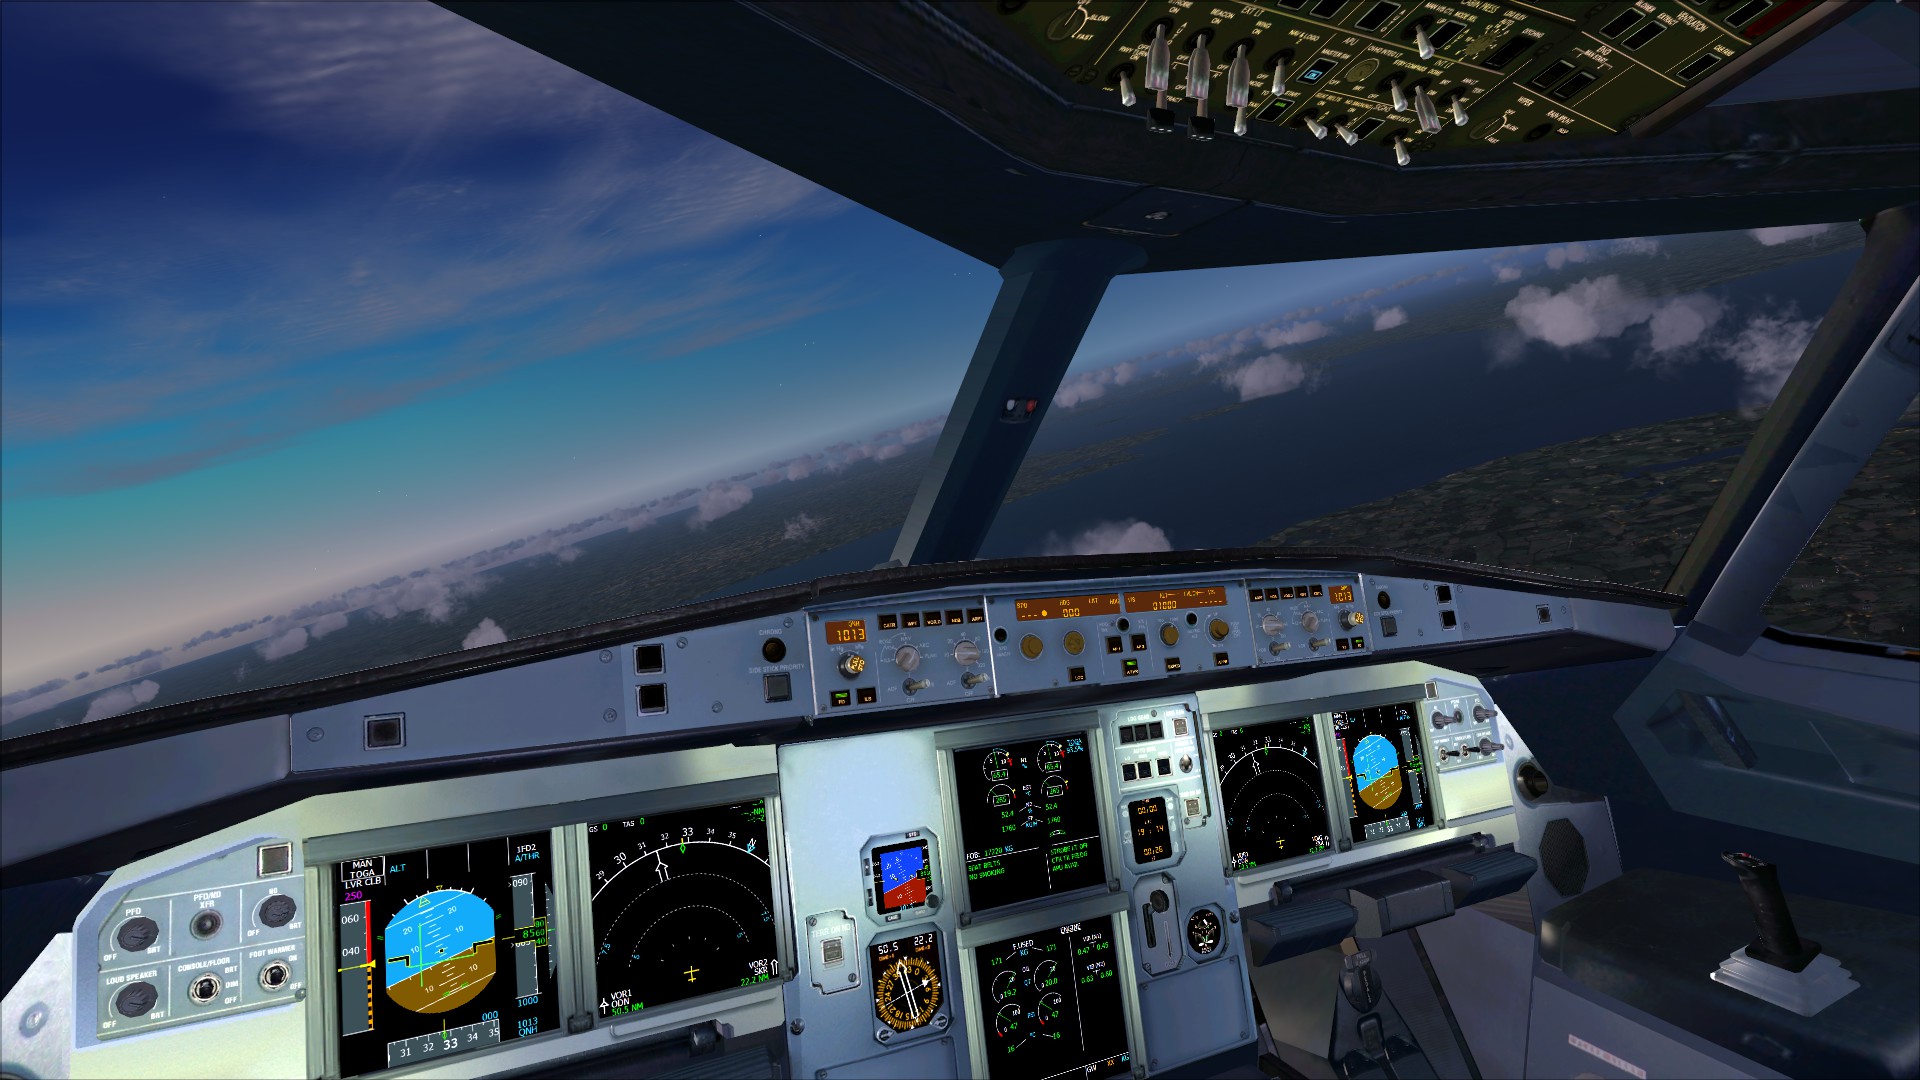 Microsoft Flight Simulator X: Steam Edition - Airbus A320/A321 (2017)